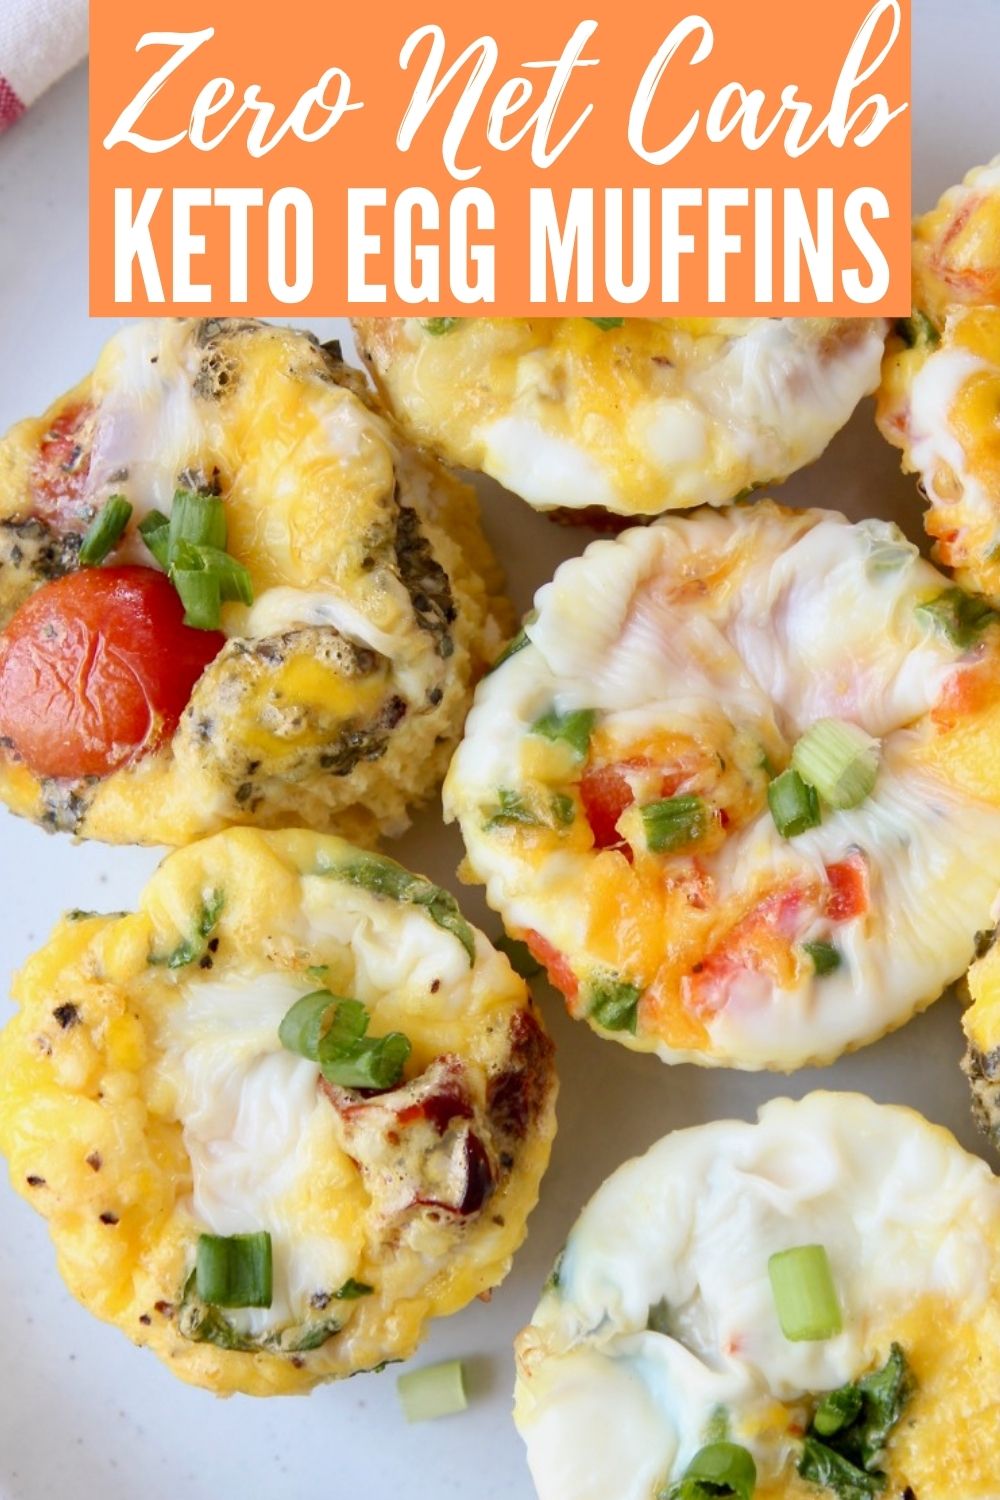 Easy Healthy Breakfast Egg Muffins - WhitneyBond.com